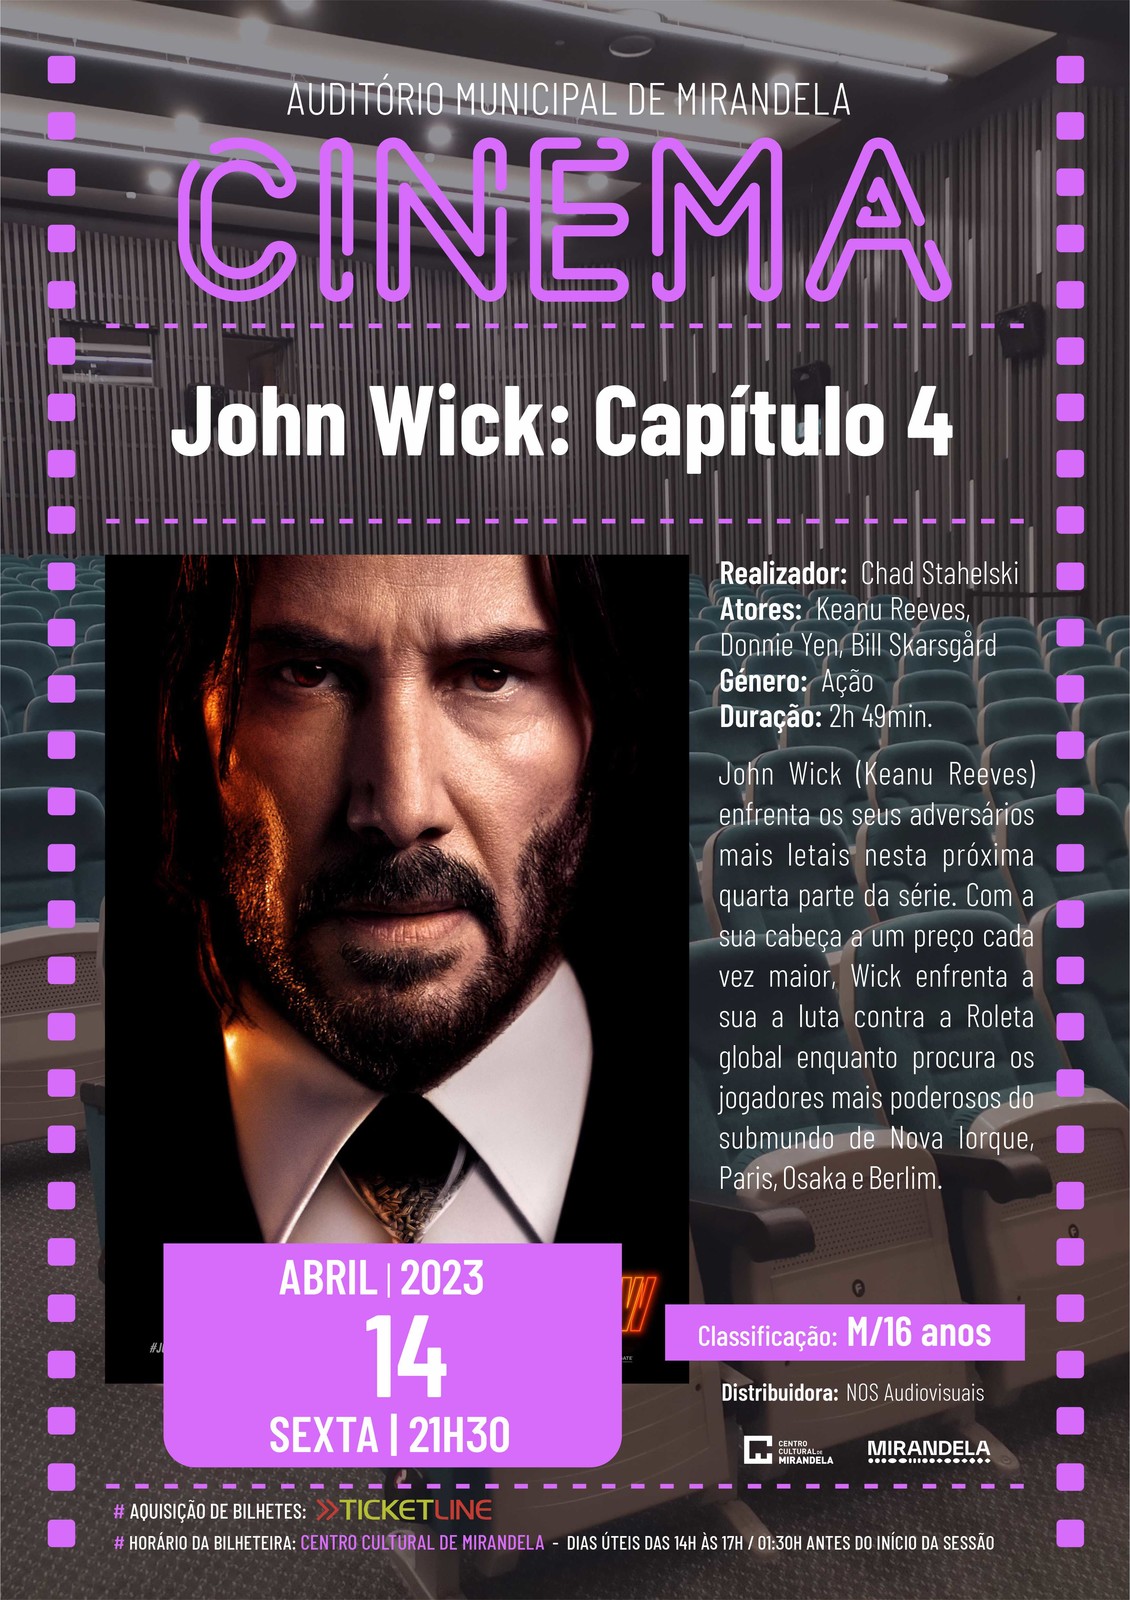 REALIZADO] Bilhetes John Wick: Capítulo 4 - Cine-Teatro de